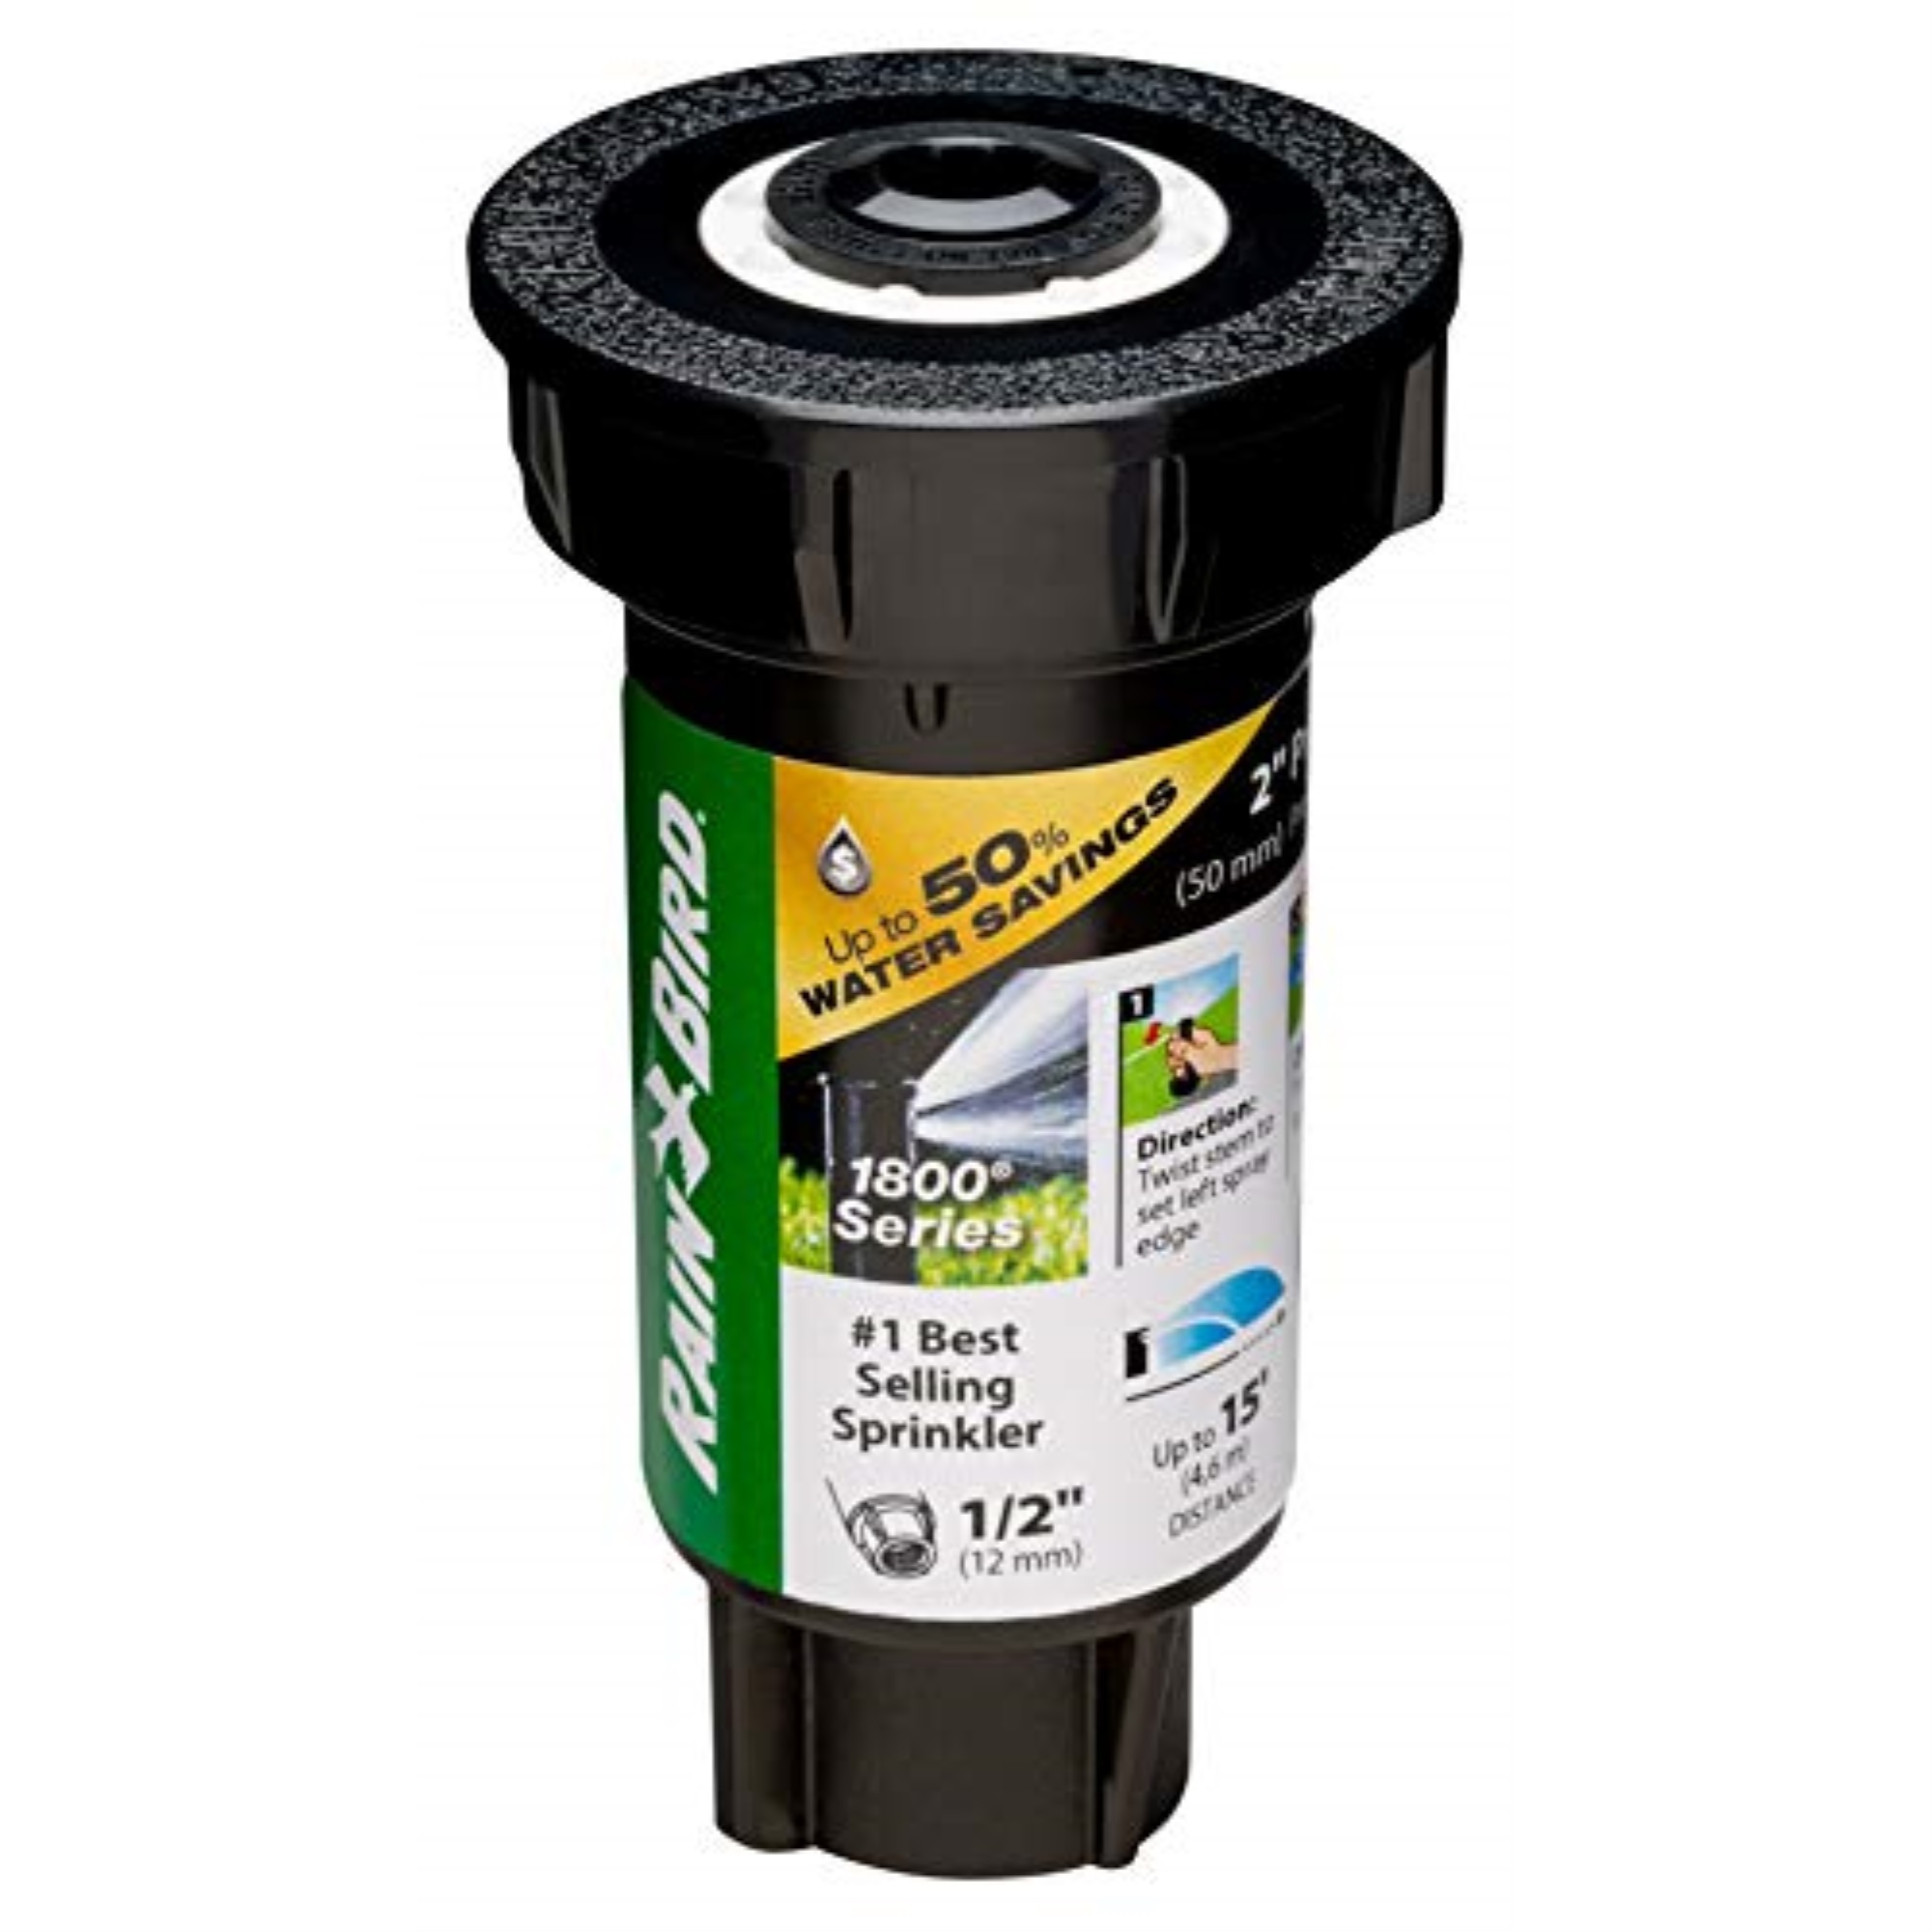 Rain Bird 1802FDSPRS Pressure Regulating Pop-Up Sprinkler, 1/2", Black - image 1 of 5